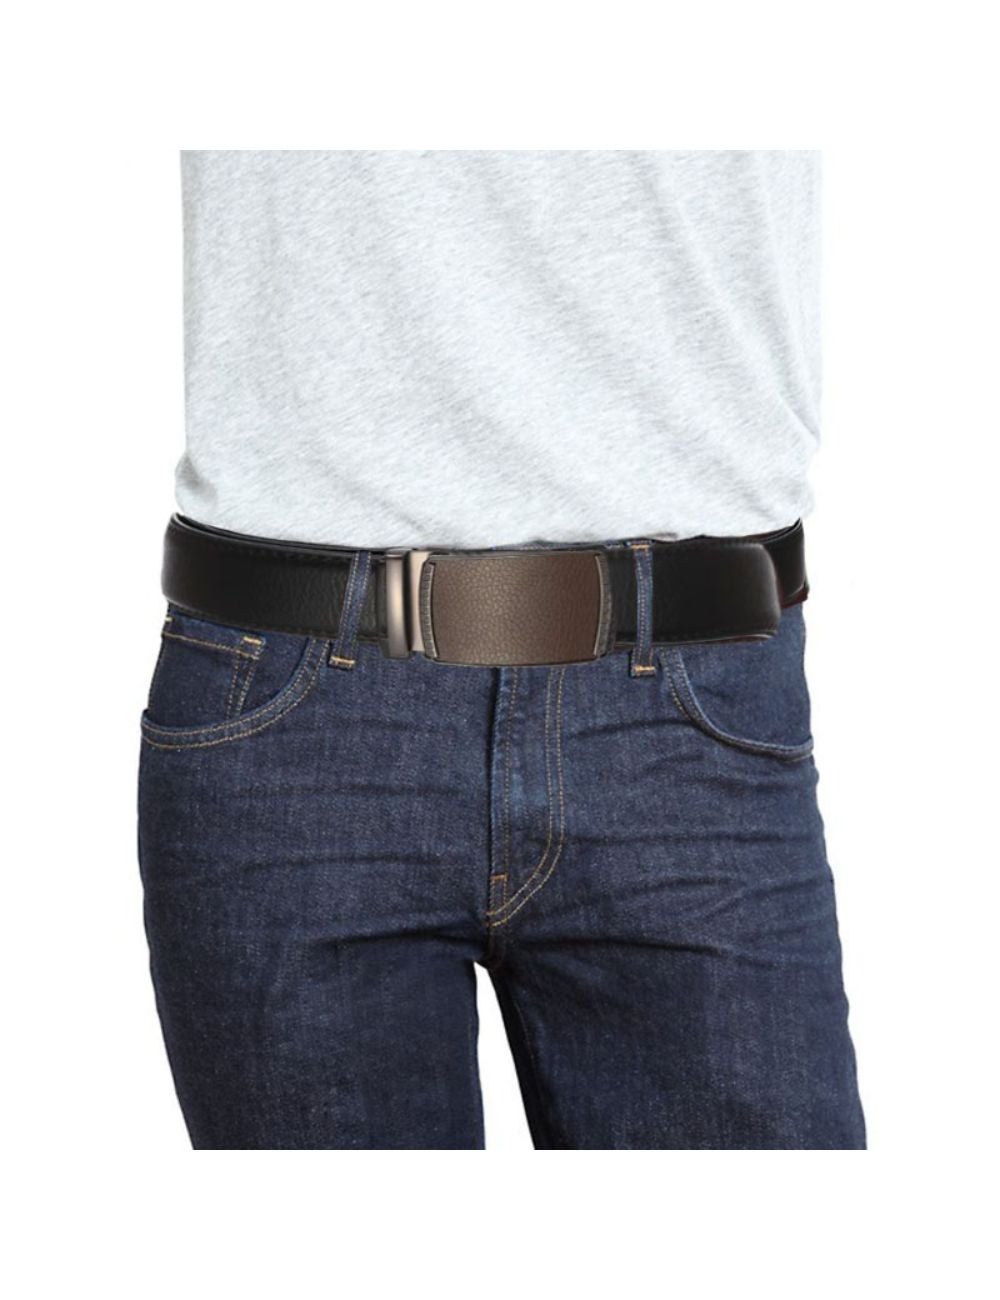 Men's Leather Dress Belt Jeans Belt with Click Buckle, Adjustable Trim ...